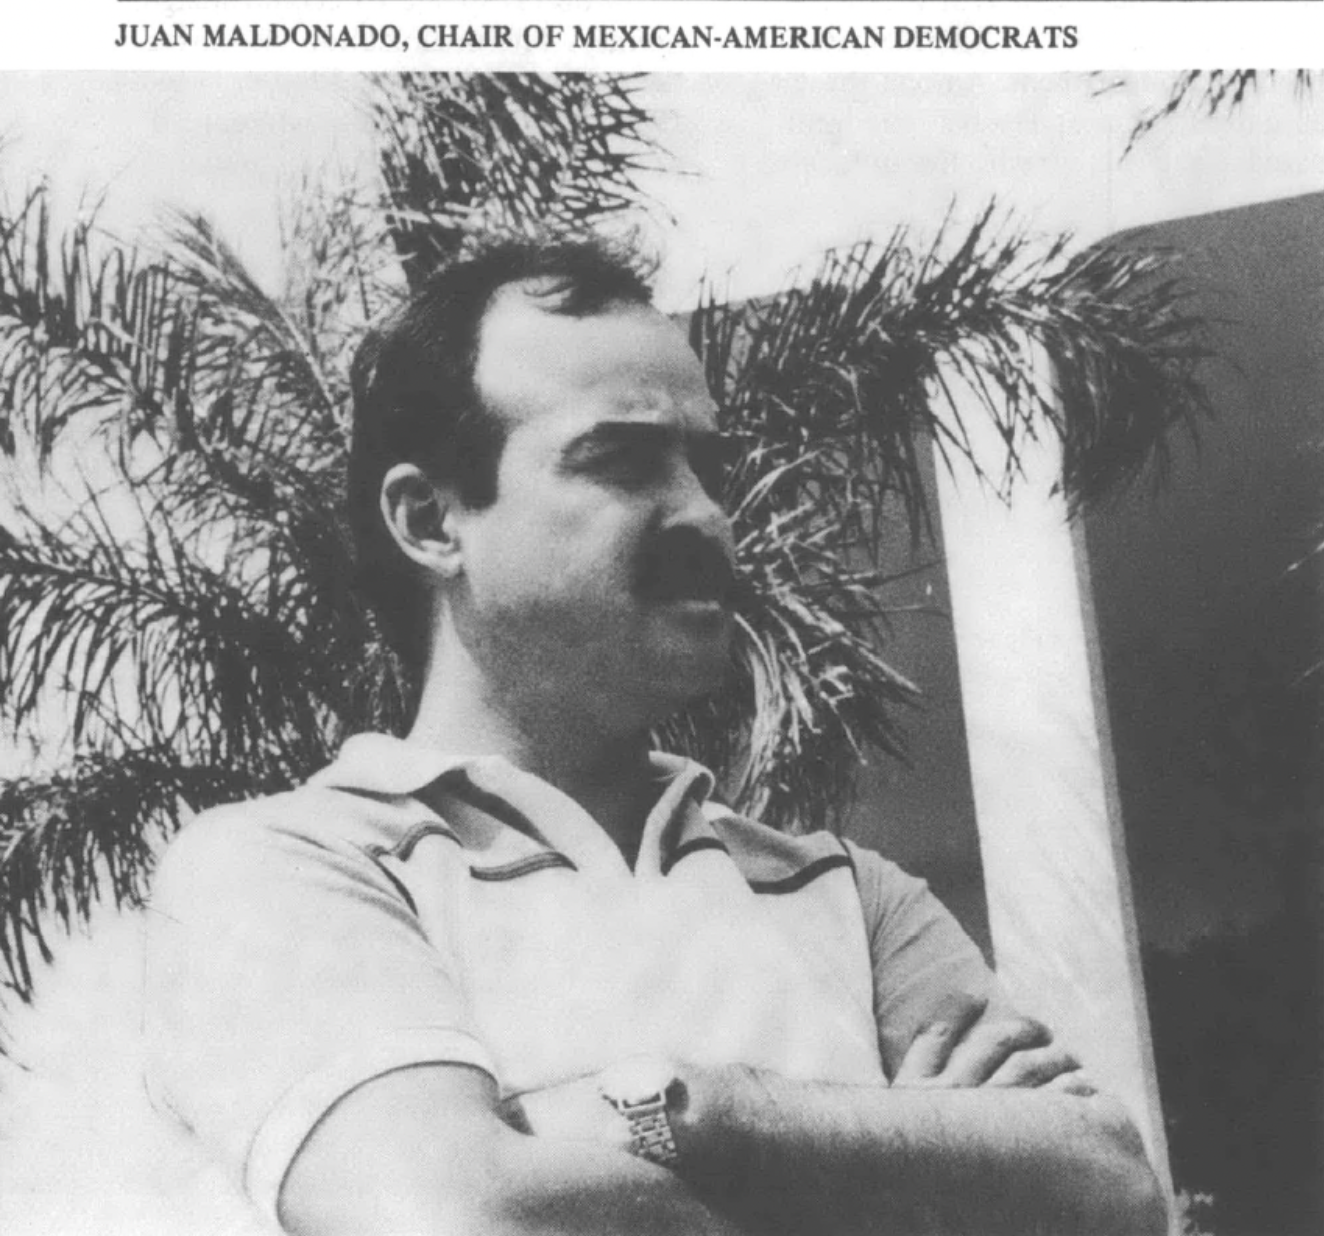 portrait of Juan Maldonado, chair of Mexican-American democrats